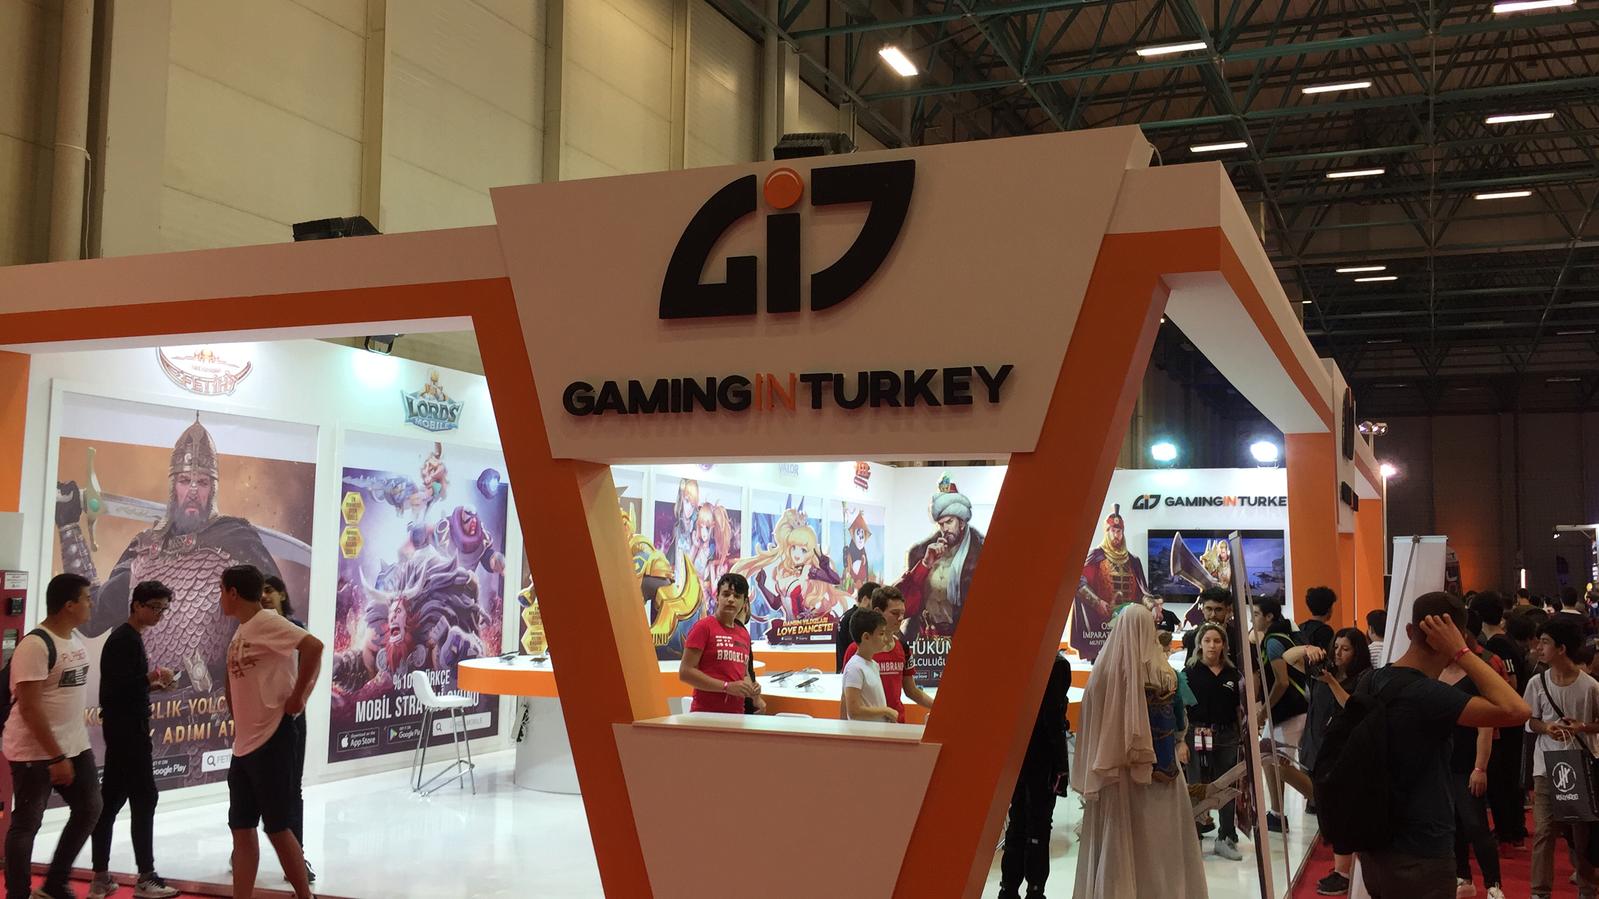 GameX 2018 - Gaming in Turkey